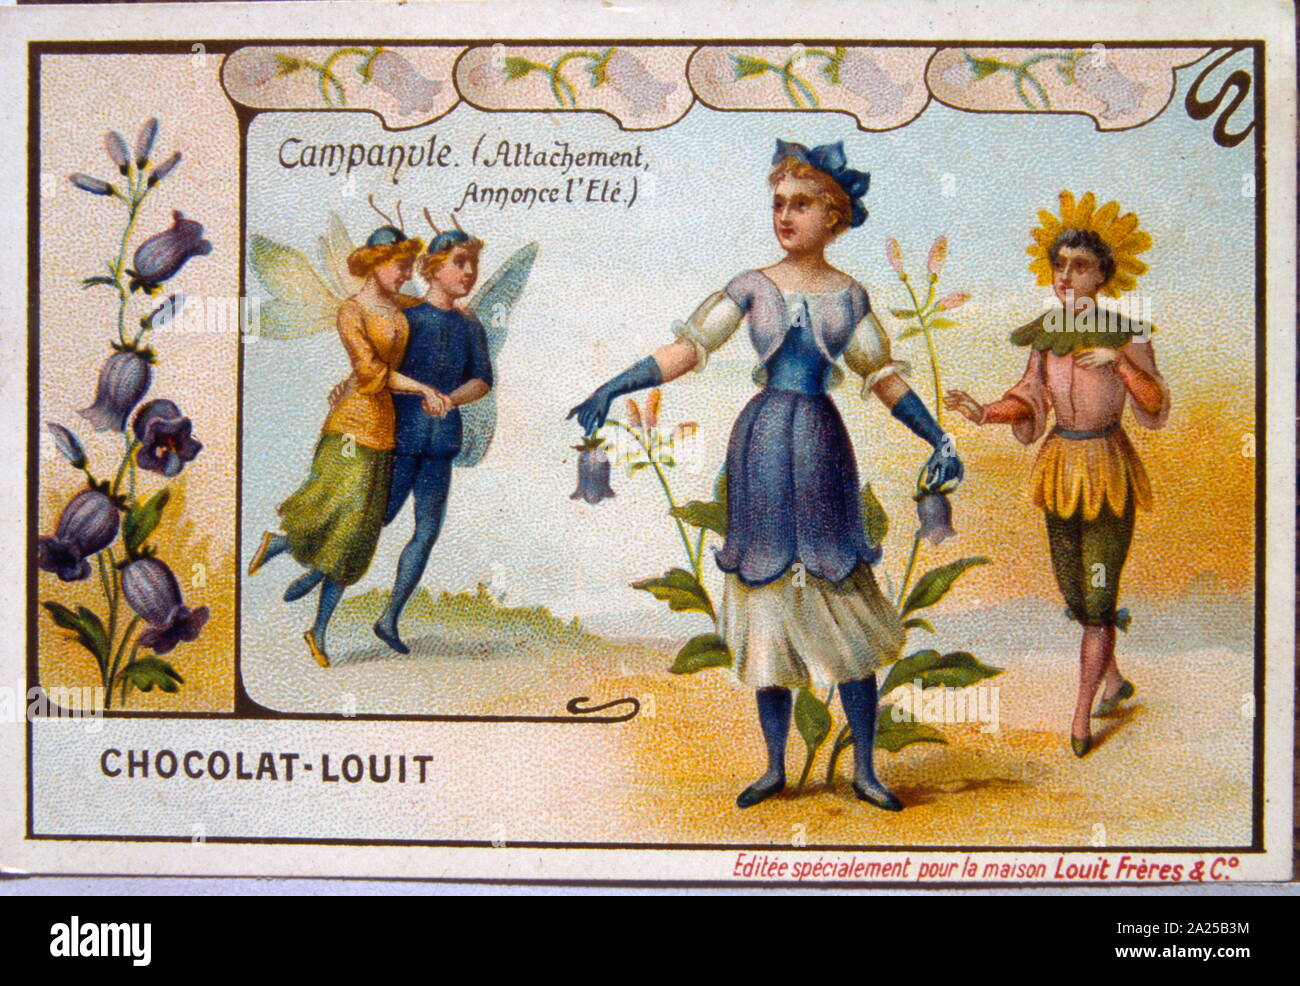 Annuncio chromolithograph per chocolat-Louit, francese, 1900 Foto Stock